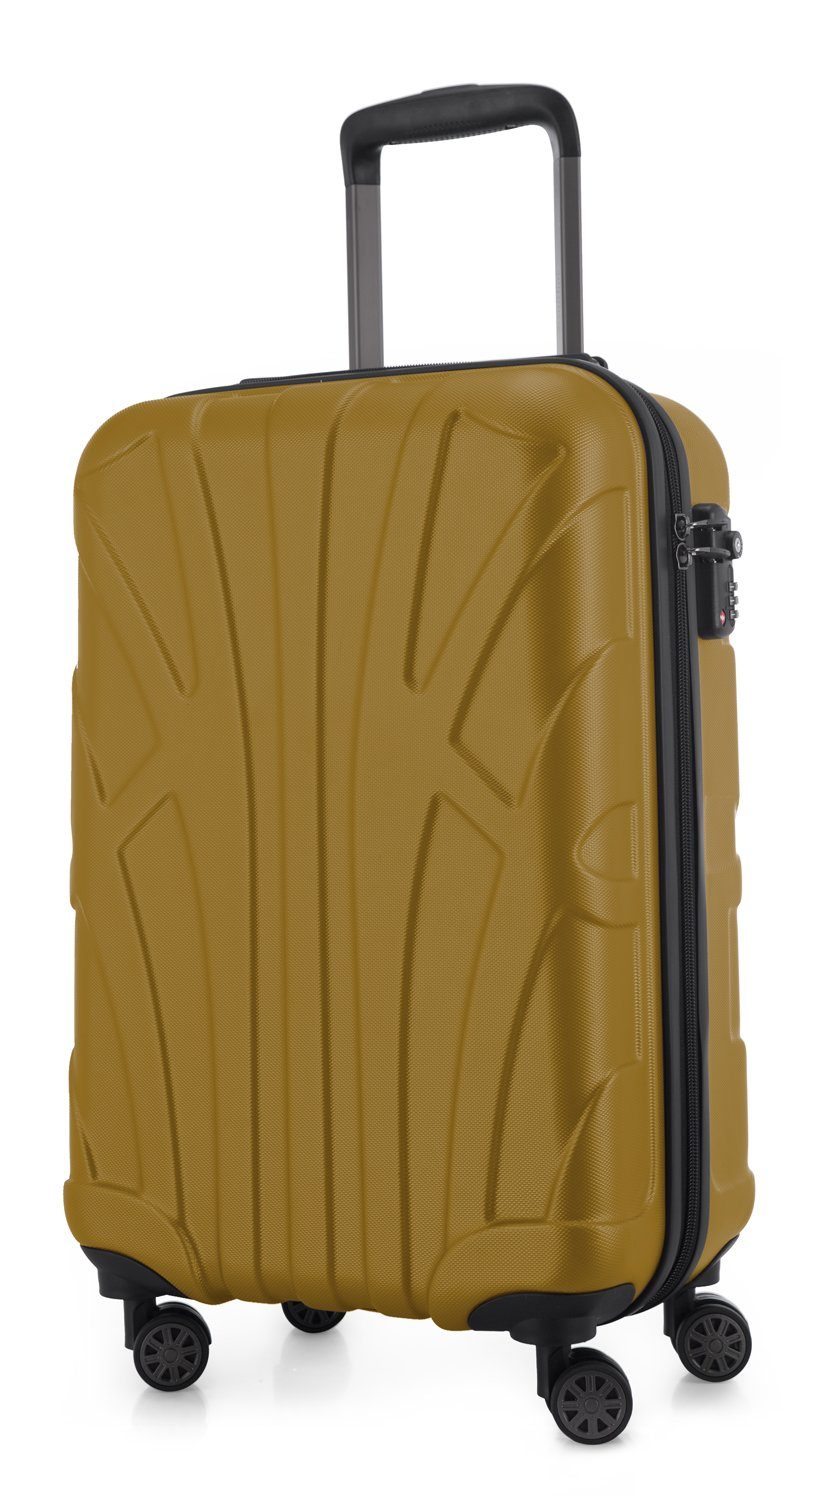 Suitline Handgepäckkoffer S1, 4 Rollen, Robust, Leicht, TSA Zahlenschloss, 55 cm, 33 L Packvolumen Herbstgold | Handgepäck-Koffer